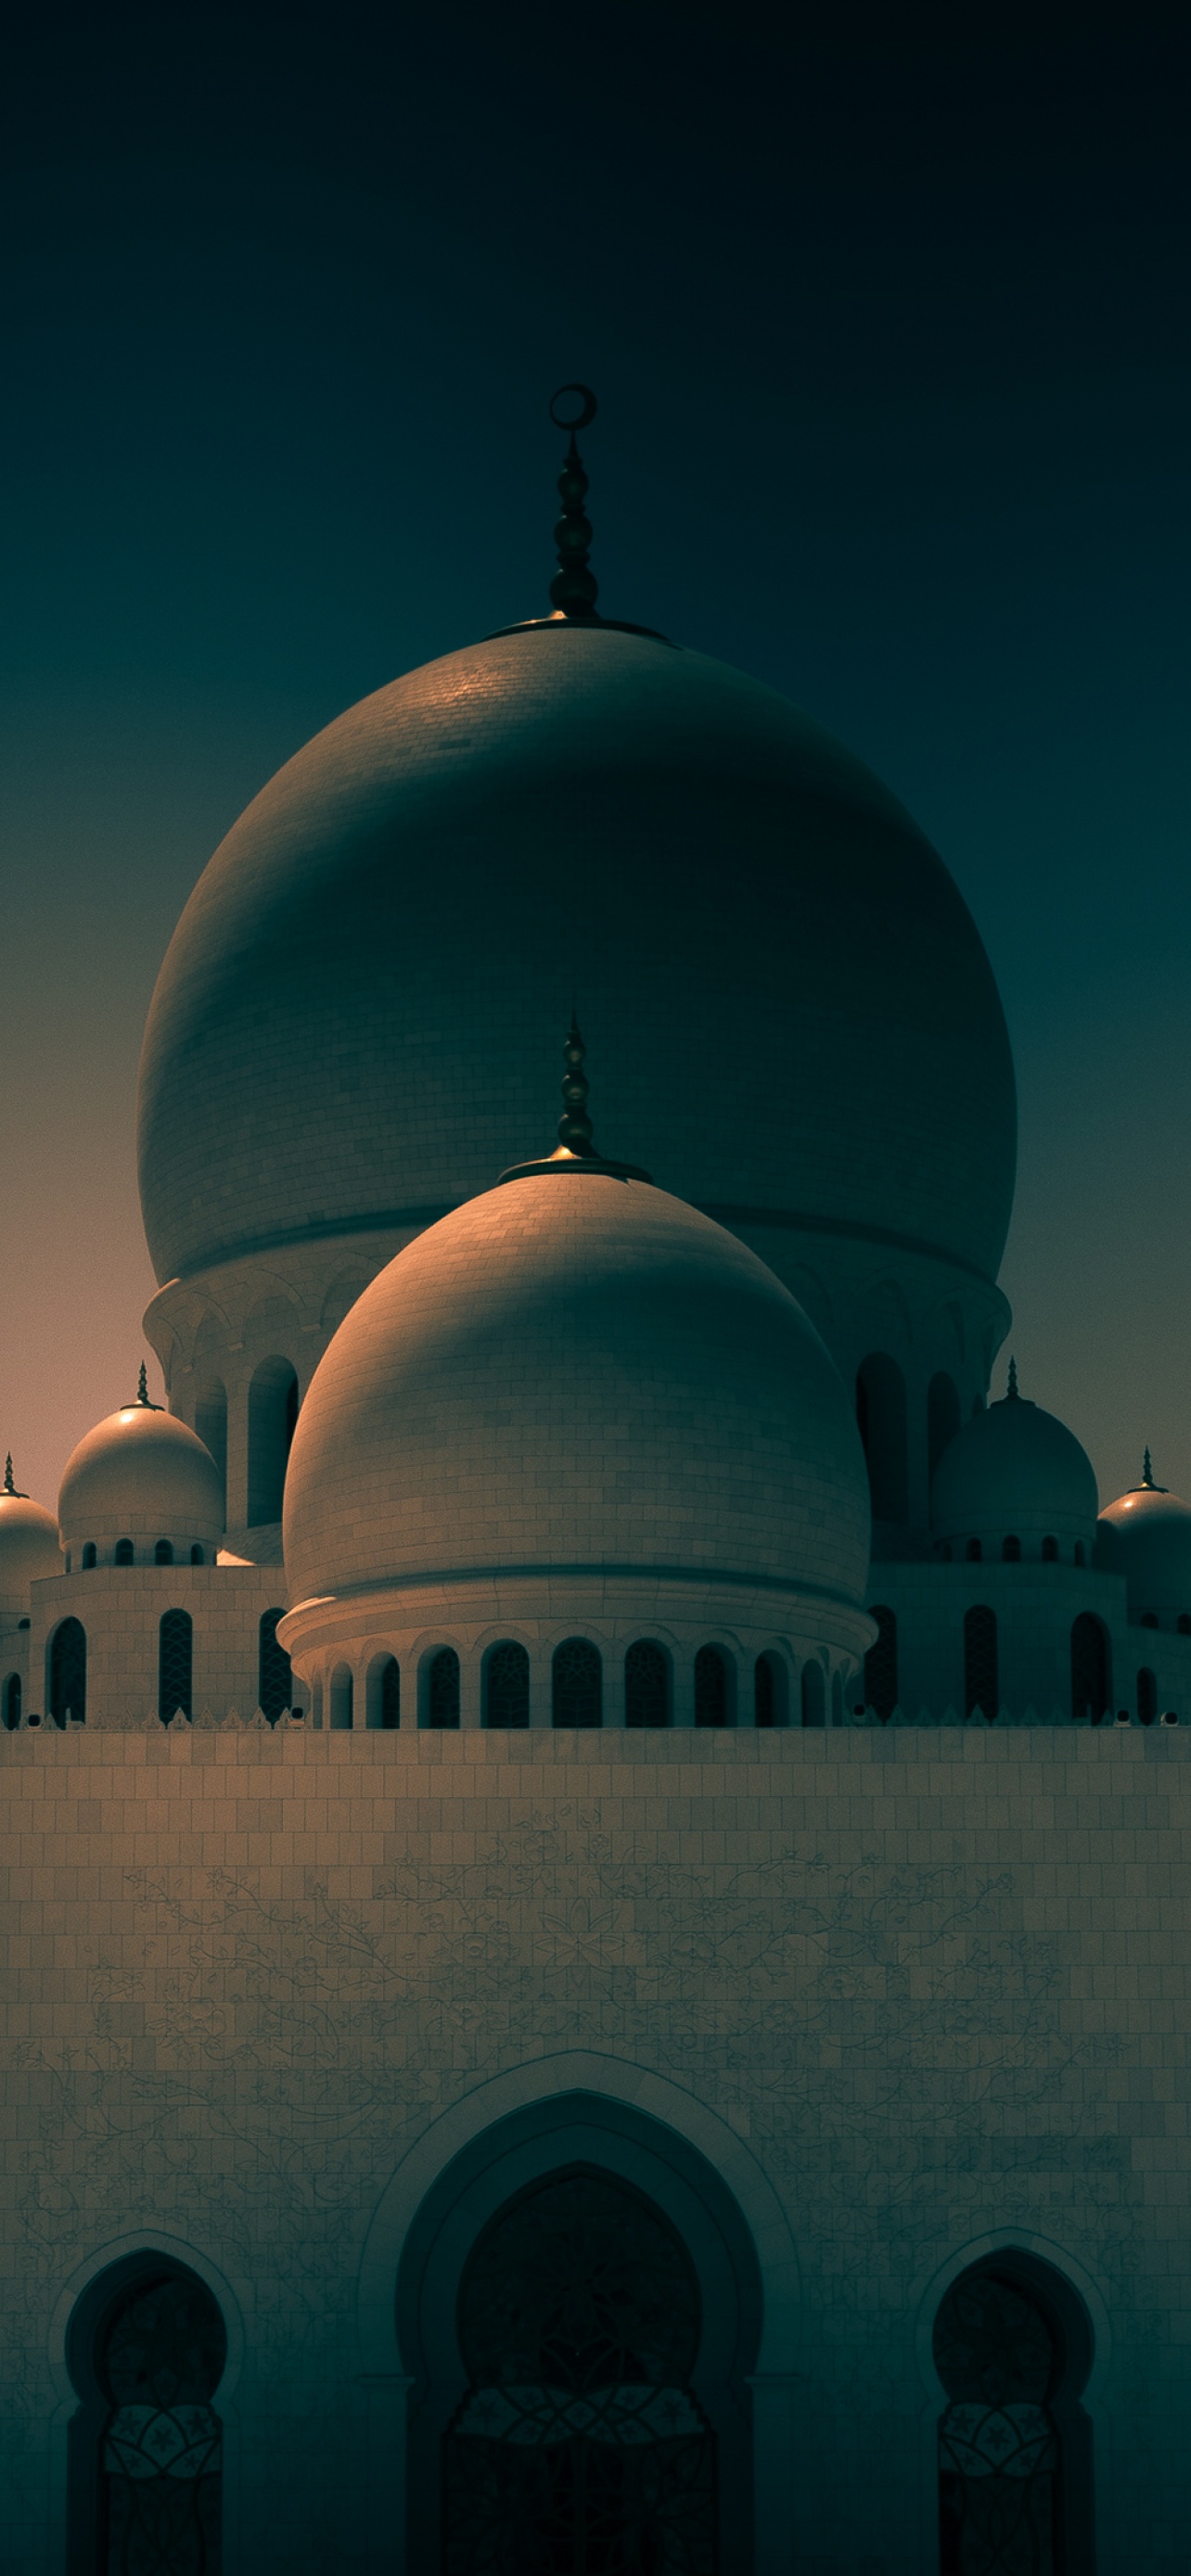 Heydar Mosque Azerbaijan Baku Lights Night for Sam iPhone Wallpapers  Free Download